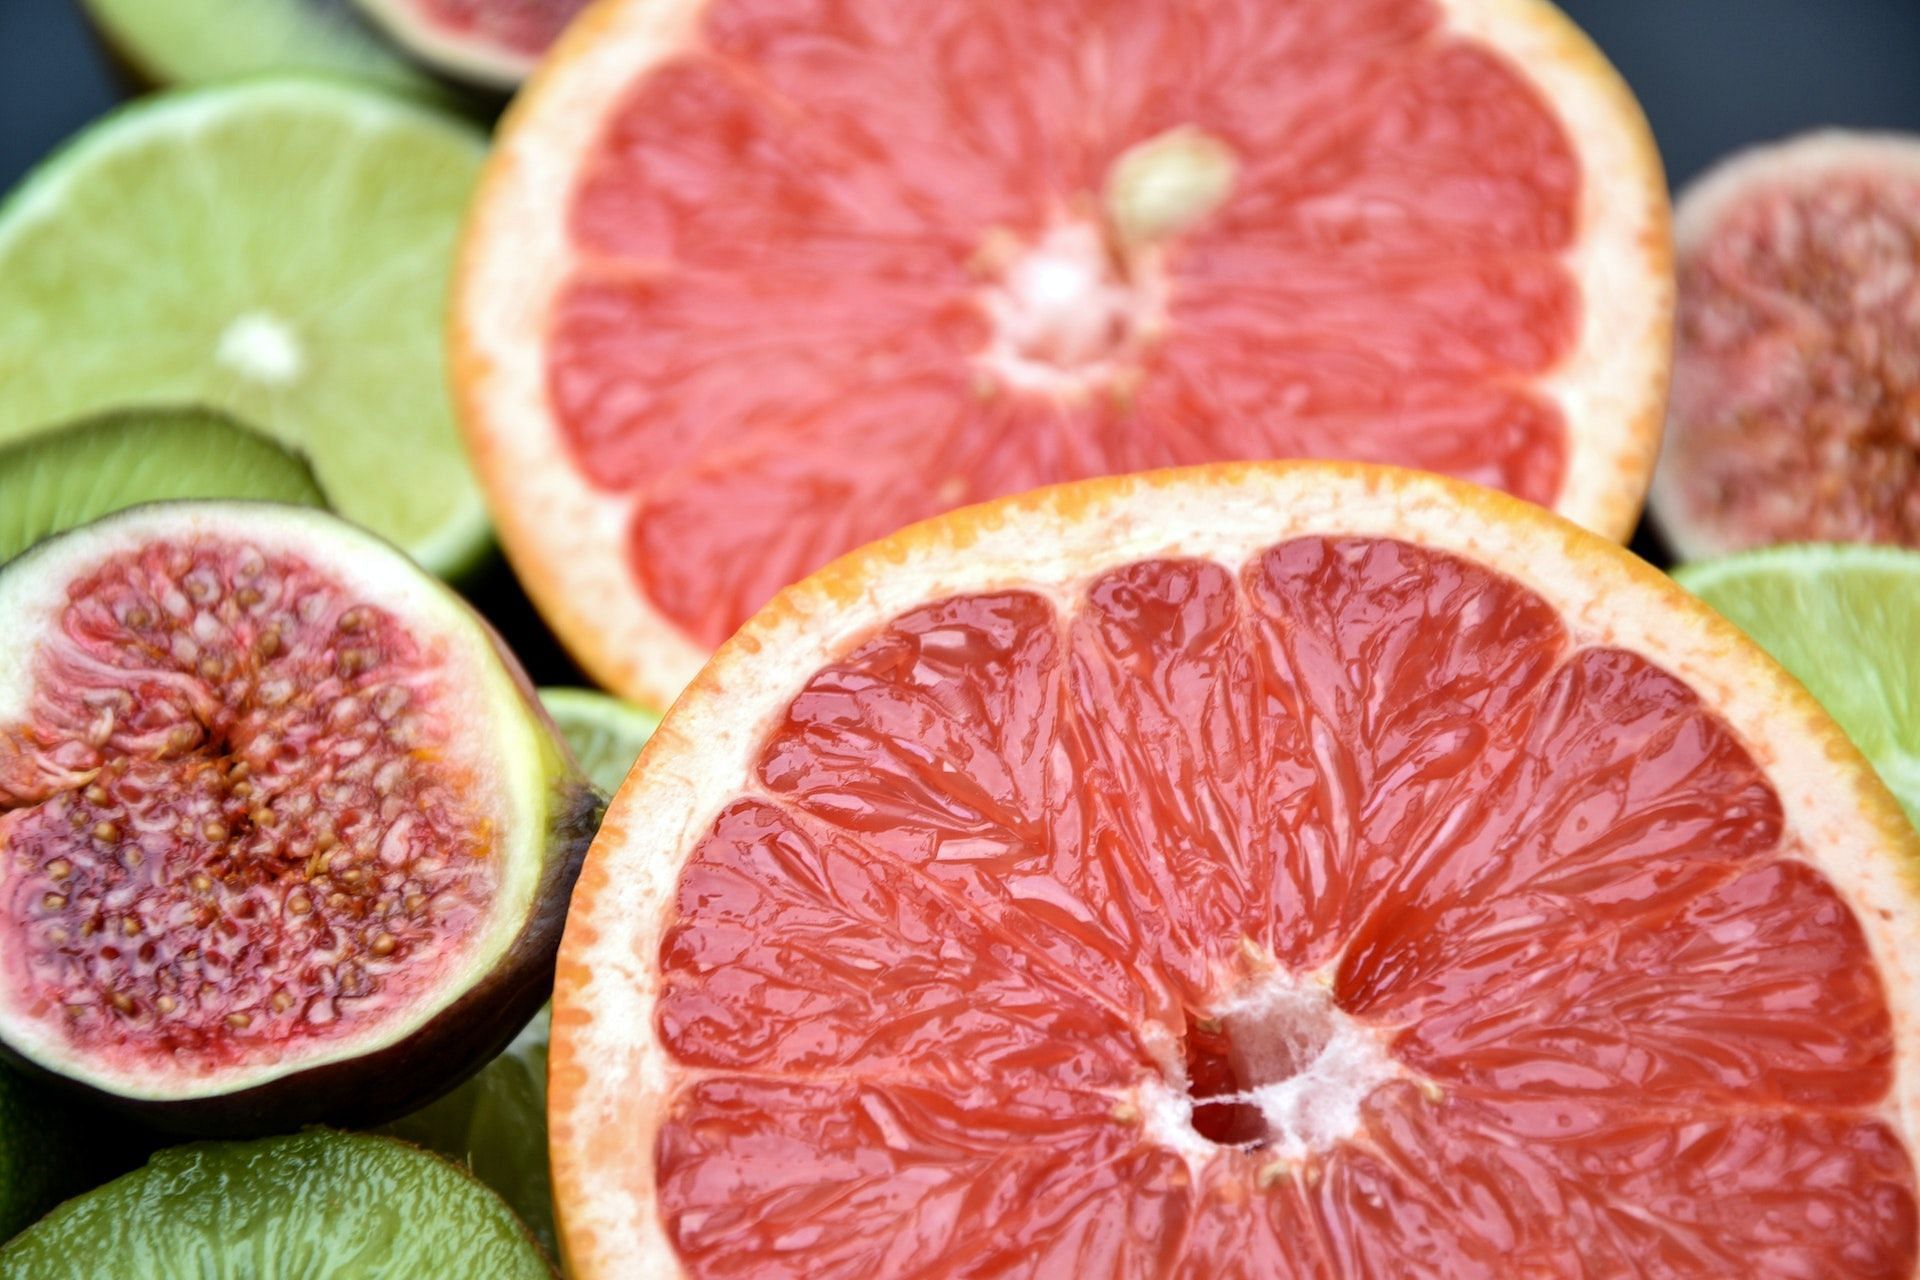 Grapefruit boosts the immune system. (Photo via Pexels/PicFoods.com)